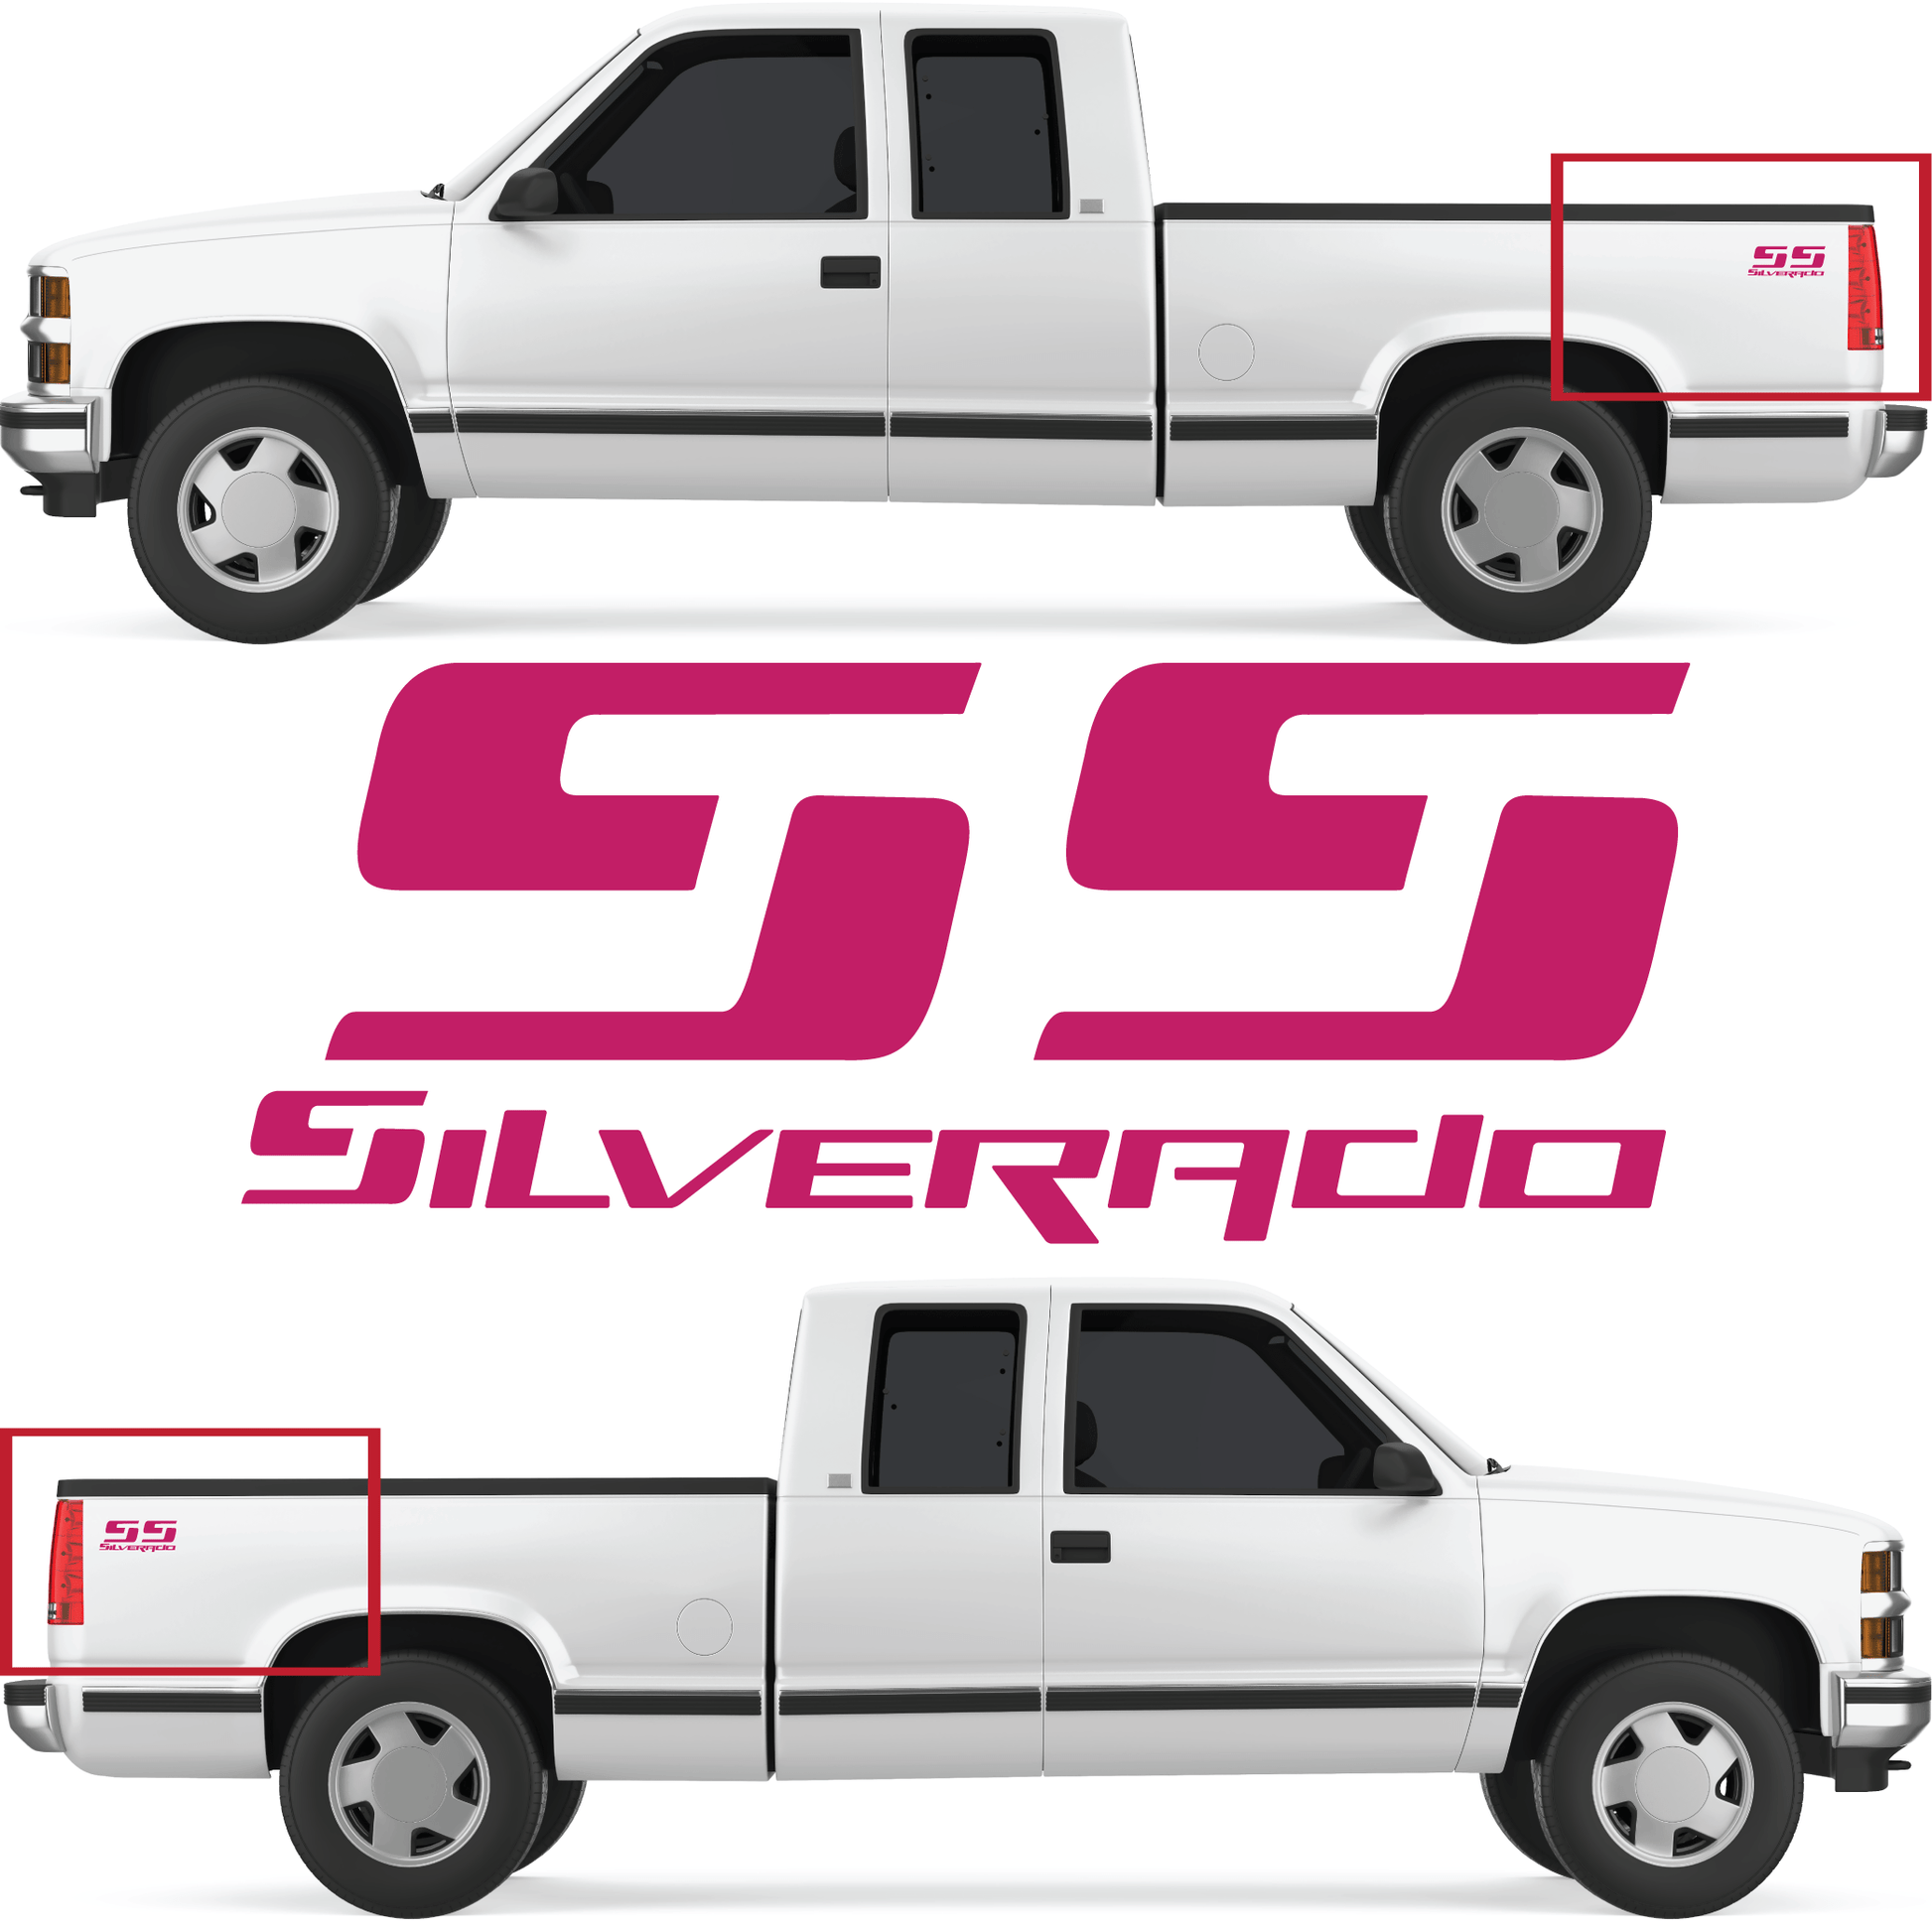 Shop Vinyl Design Silverado SS Replacement Bedside Decals Vehicle 001 Hot Pink Gloss Shop Vinyl Design decals stickers